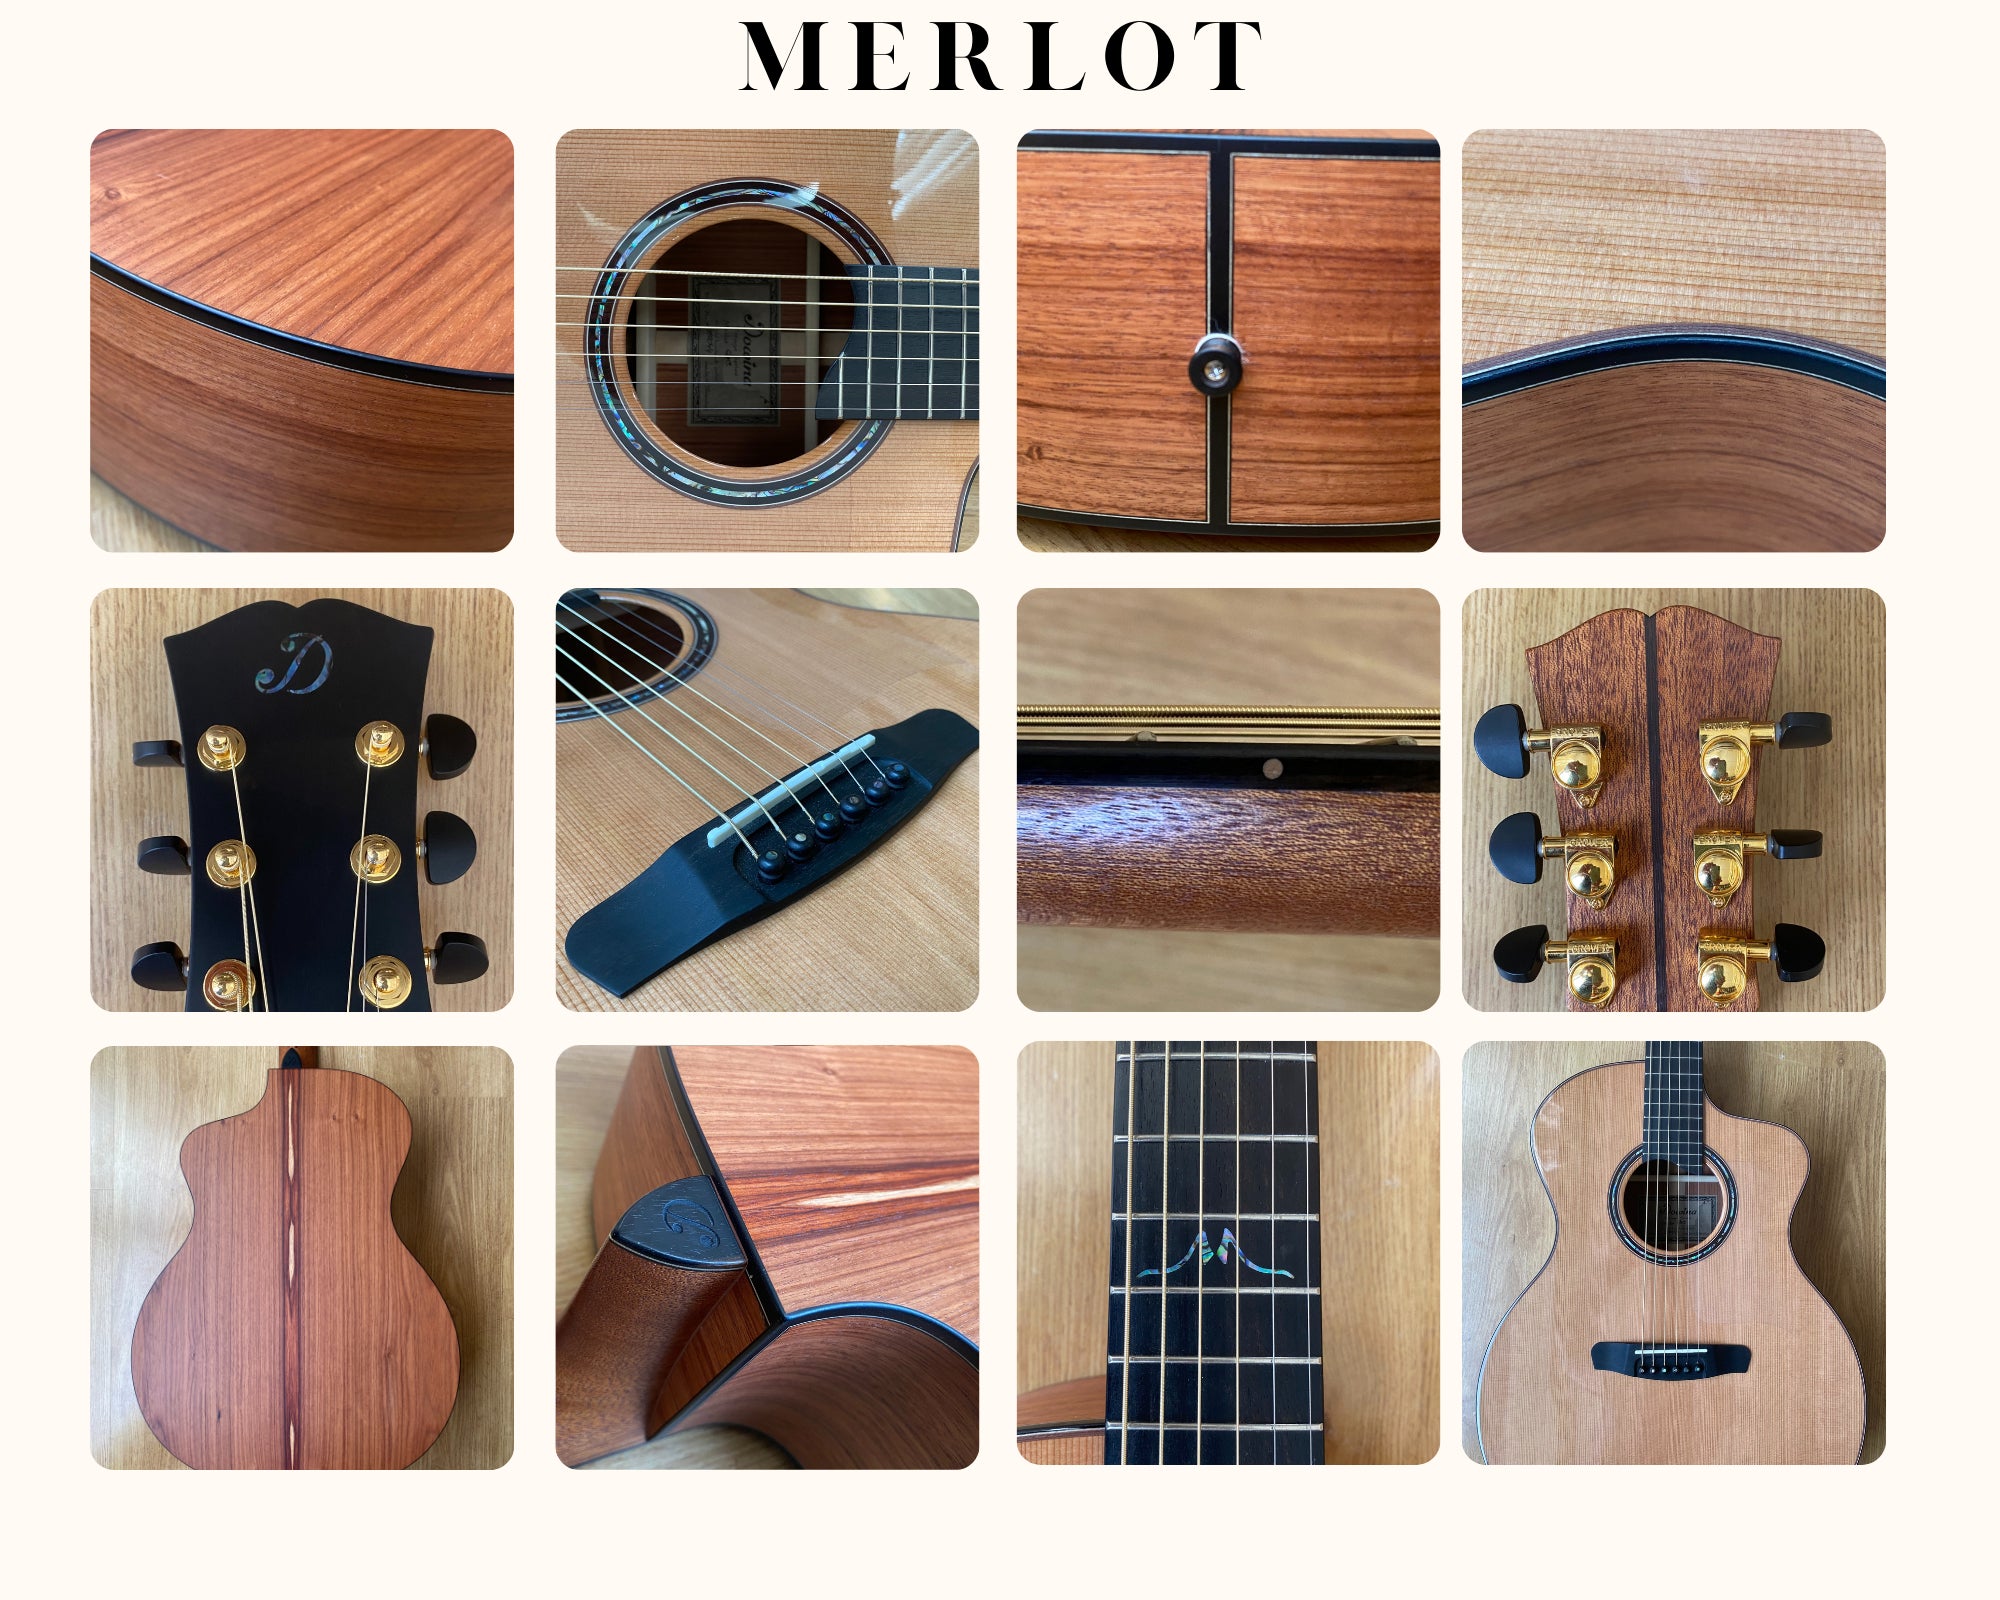 Dowina Merlot GAC S / Macacauba Acoustic Guitar, Acoustic Guitar for sale at Richards Guitars.